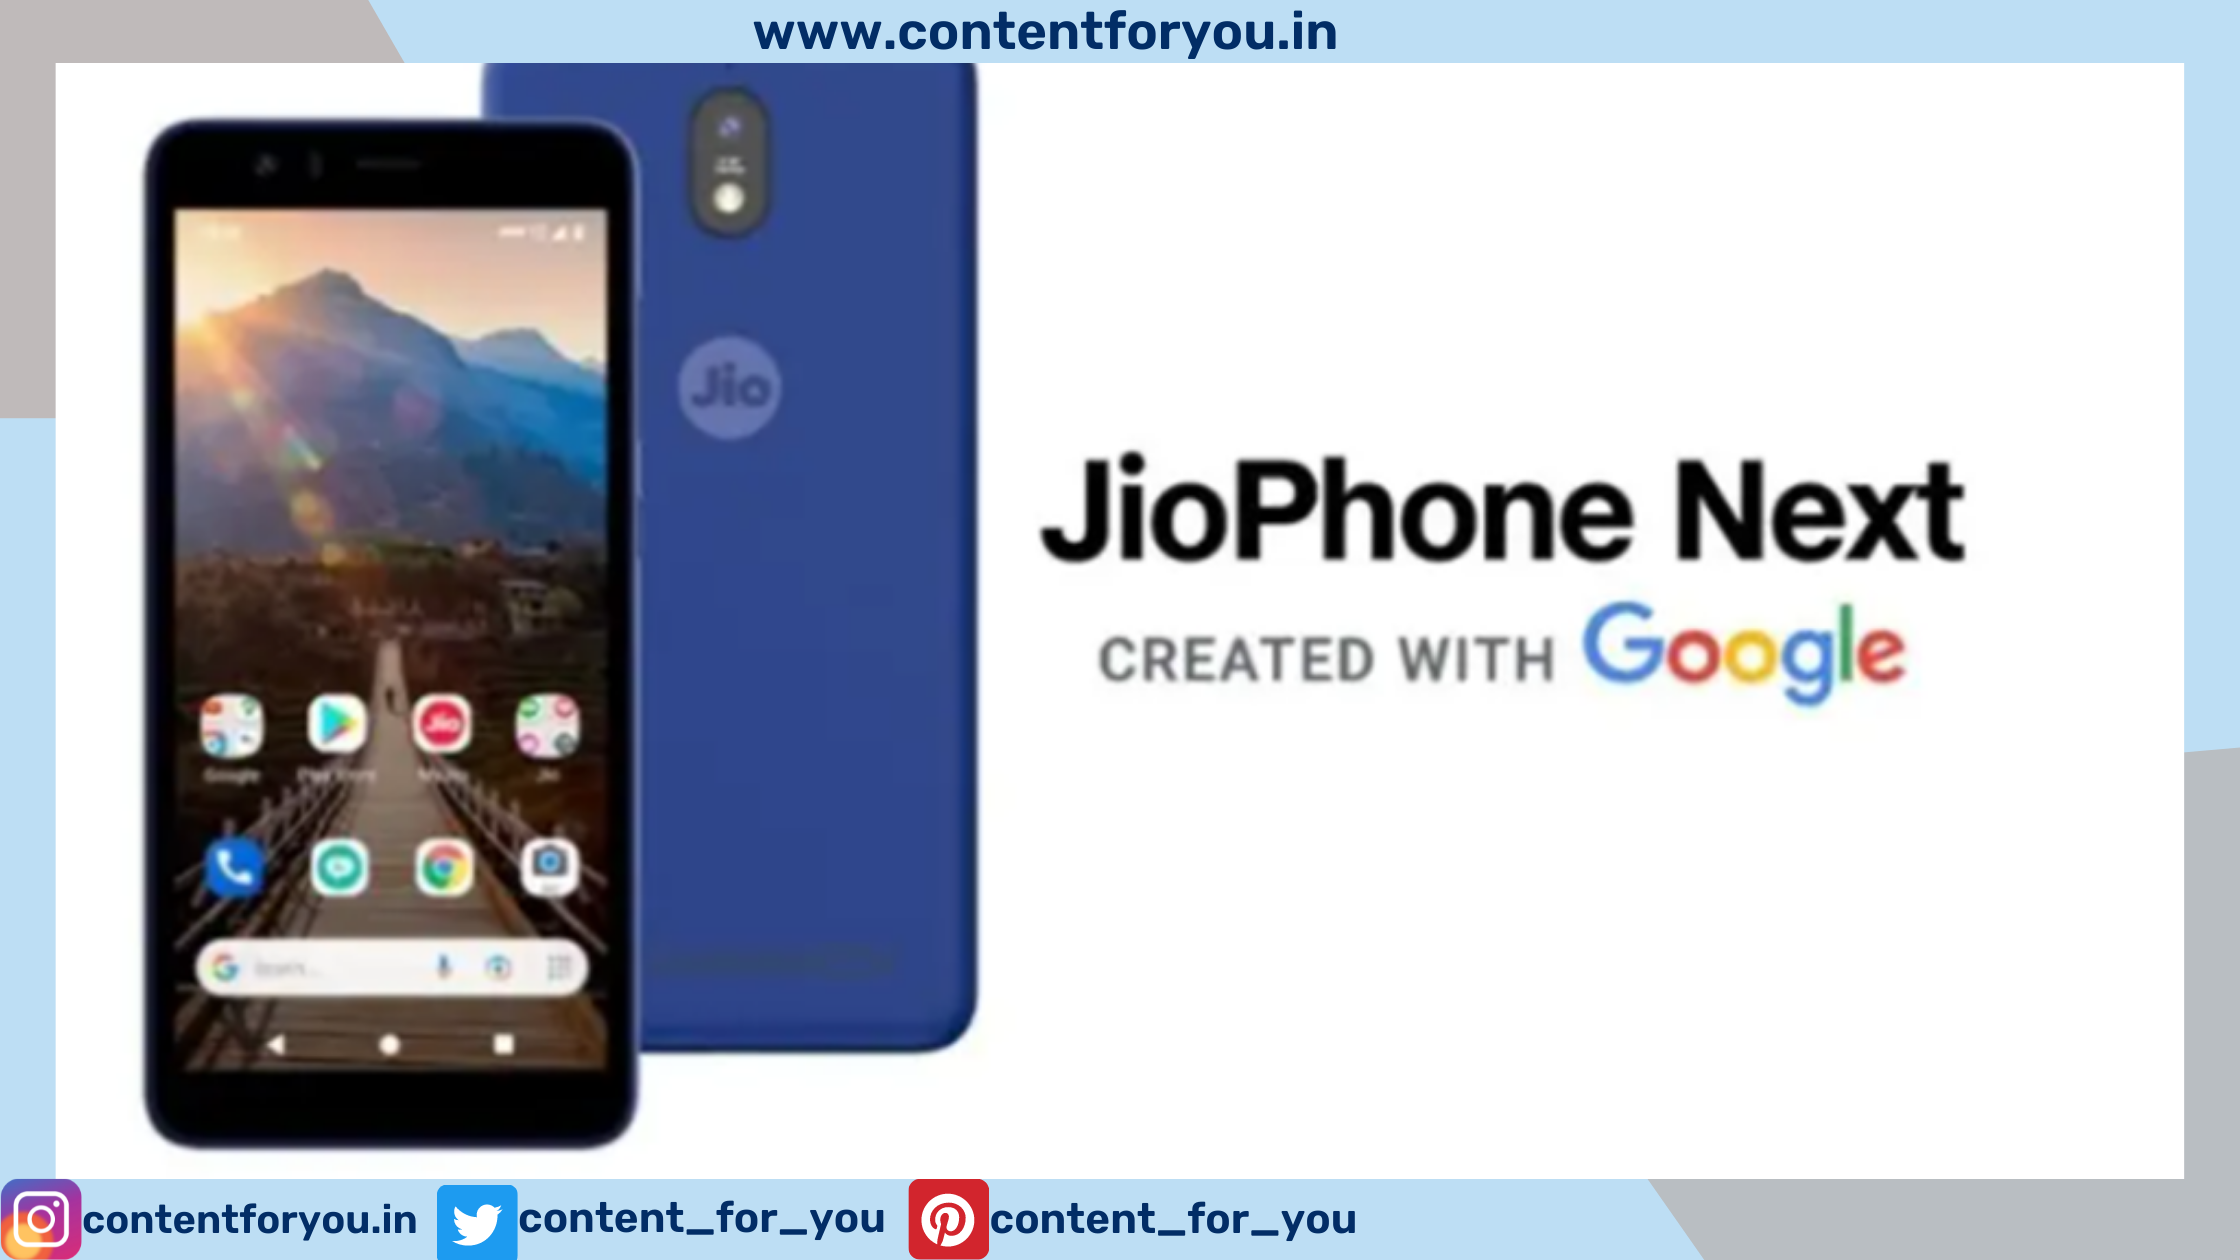 Now buy your Jio Phone Next smartphone